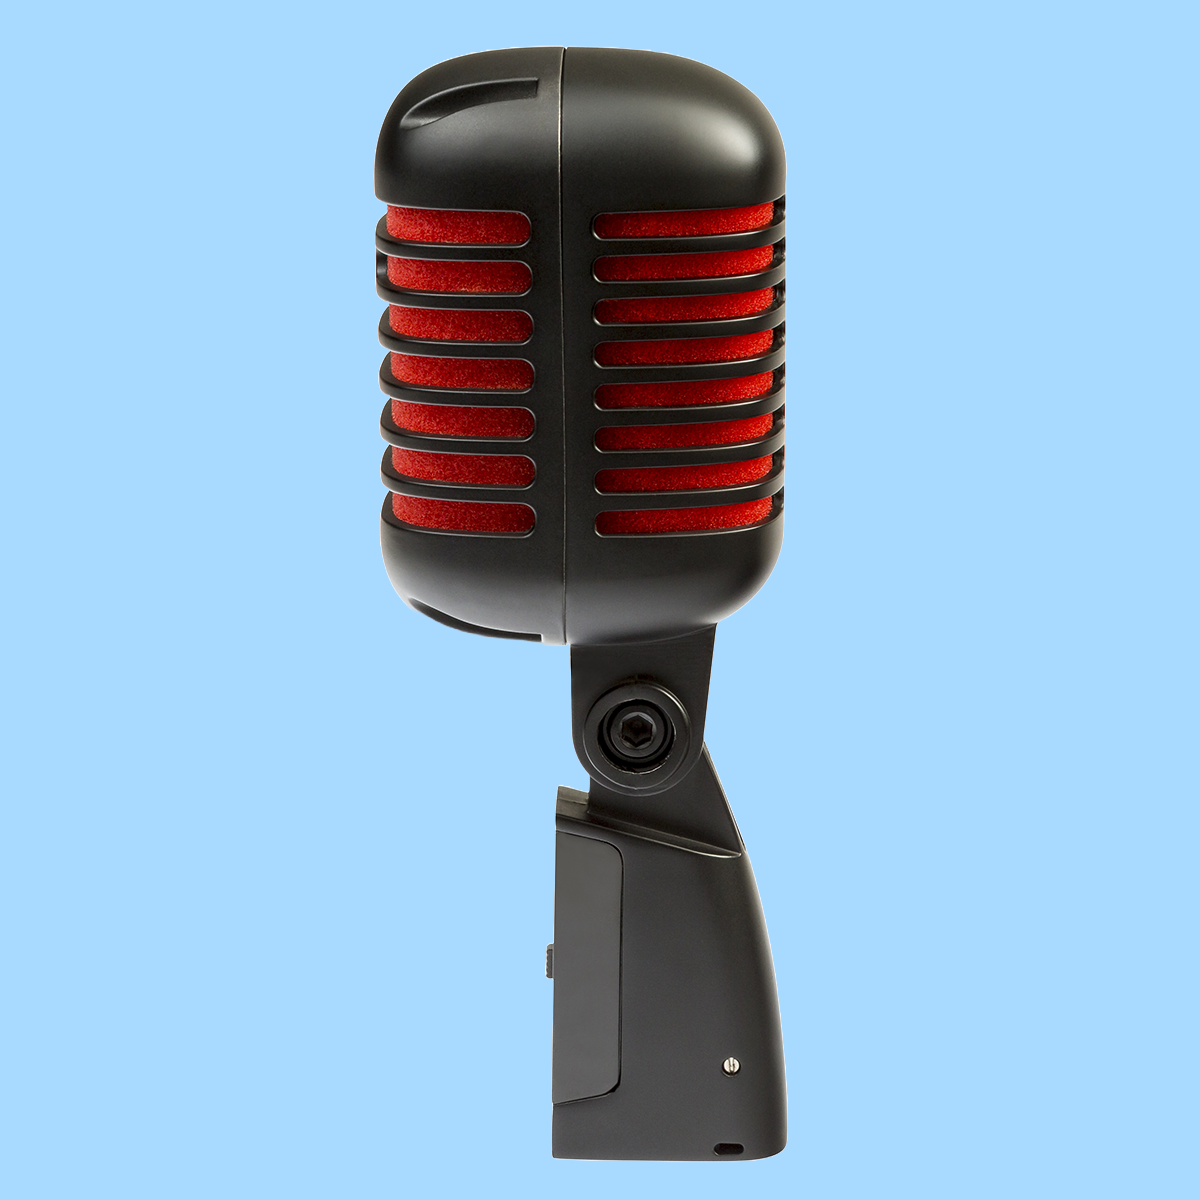 Eikon DM55V2RDBK Vintage Style Professional Vocal Dynamic Microphone - Satin Black & Red